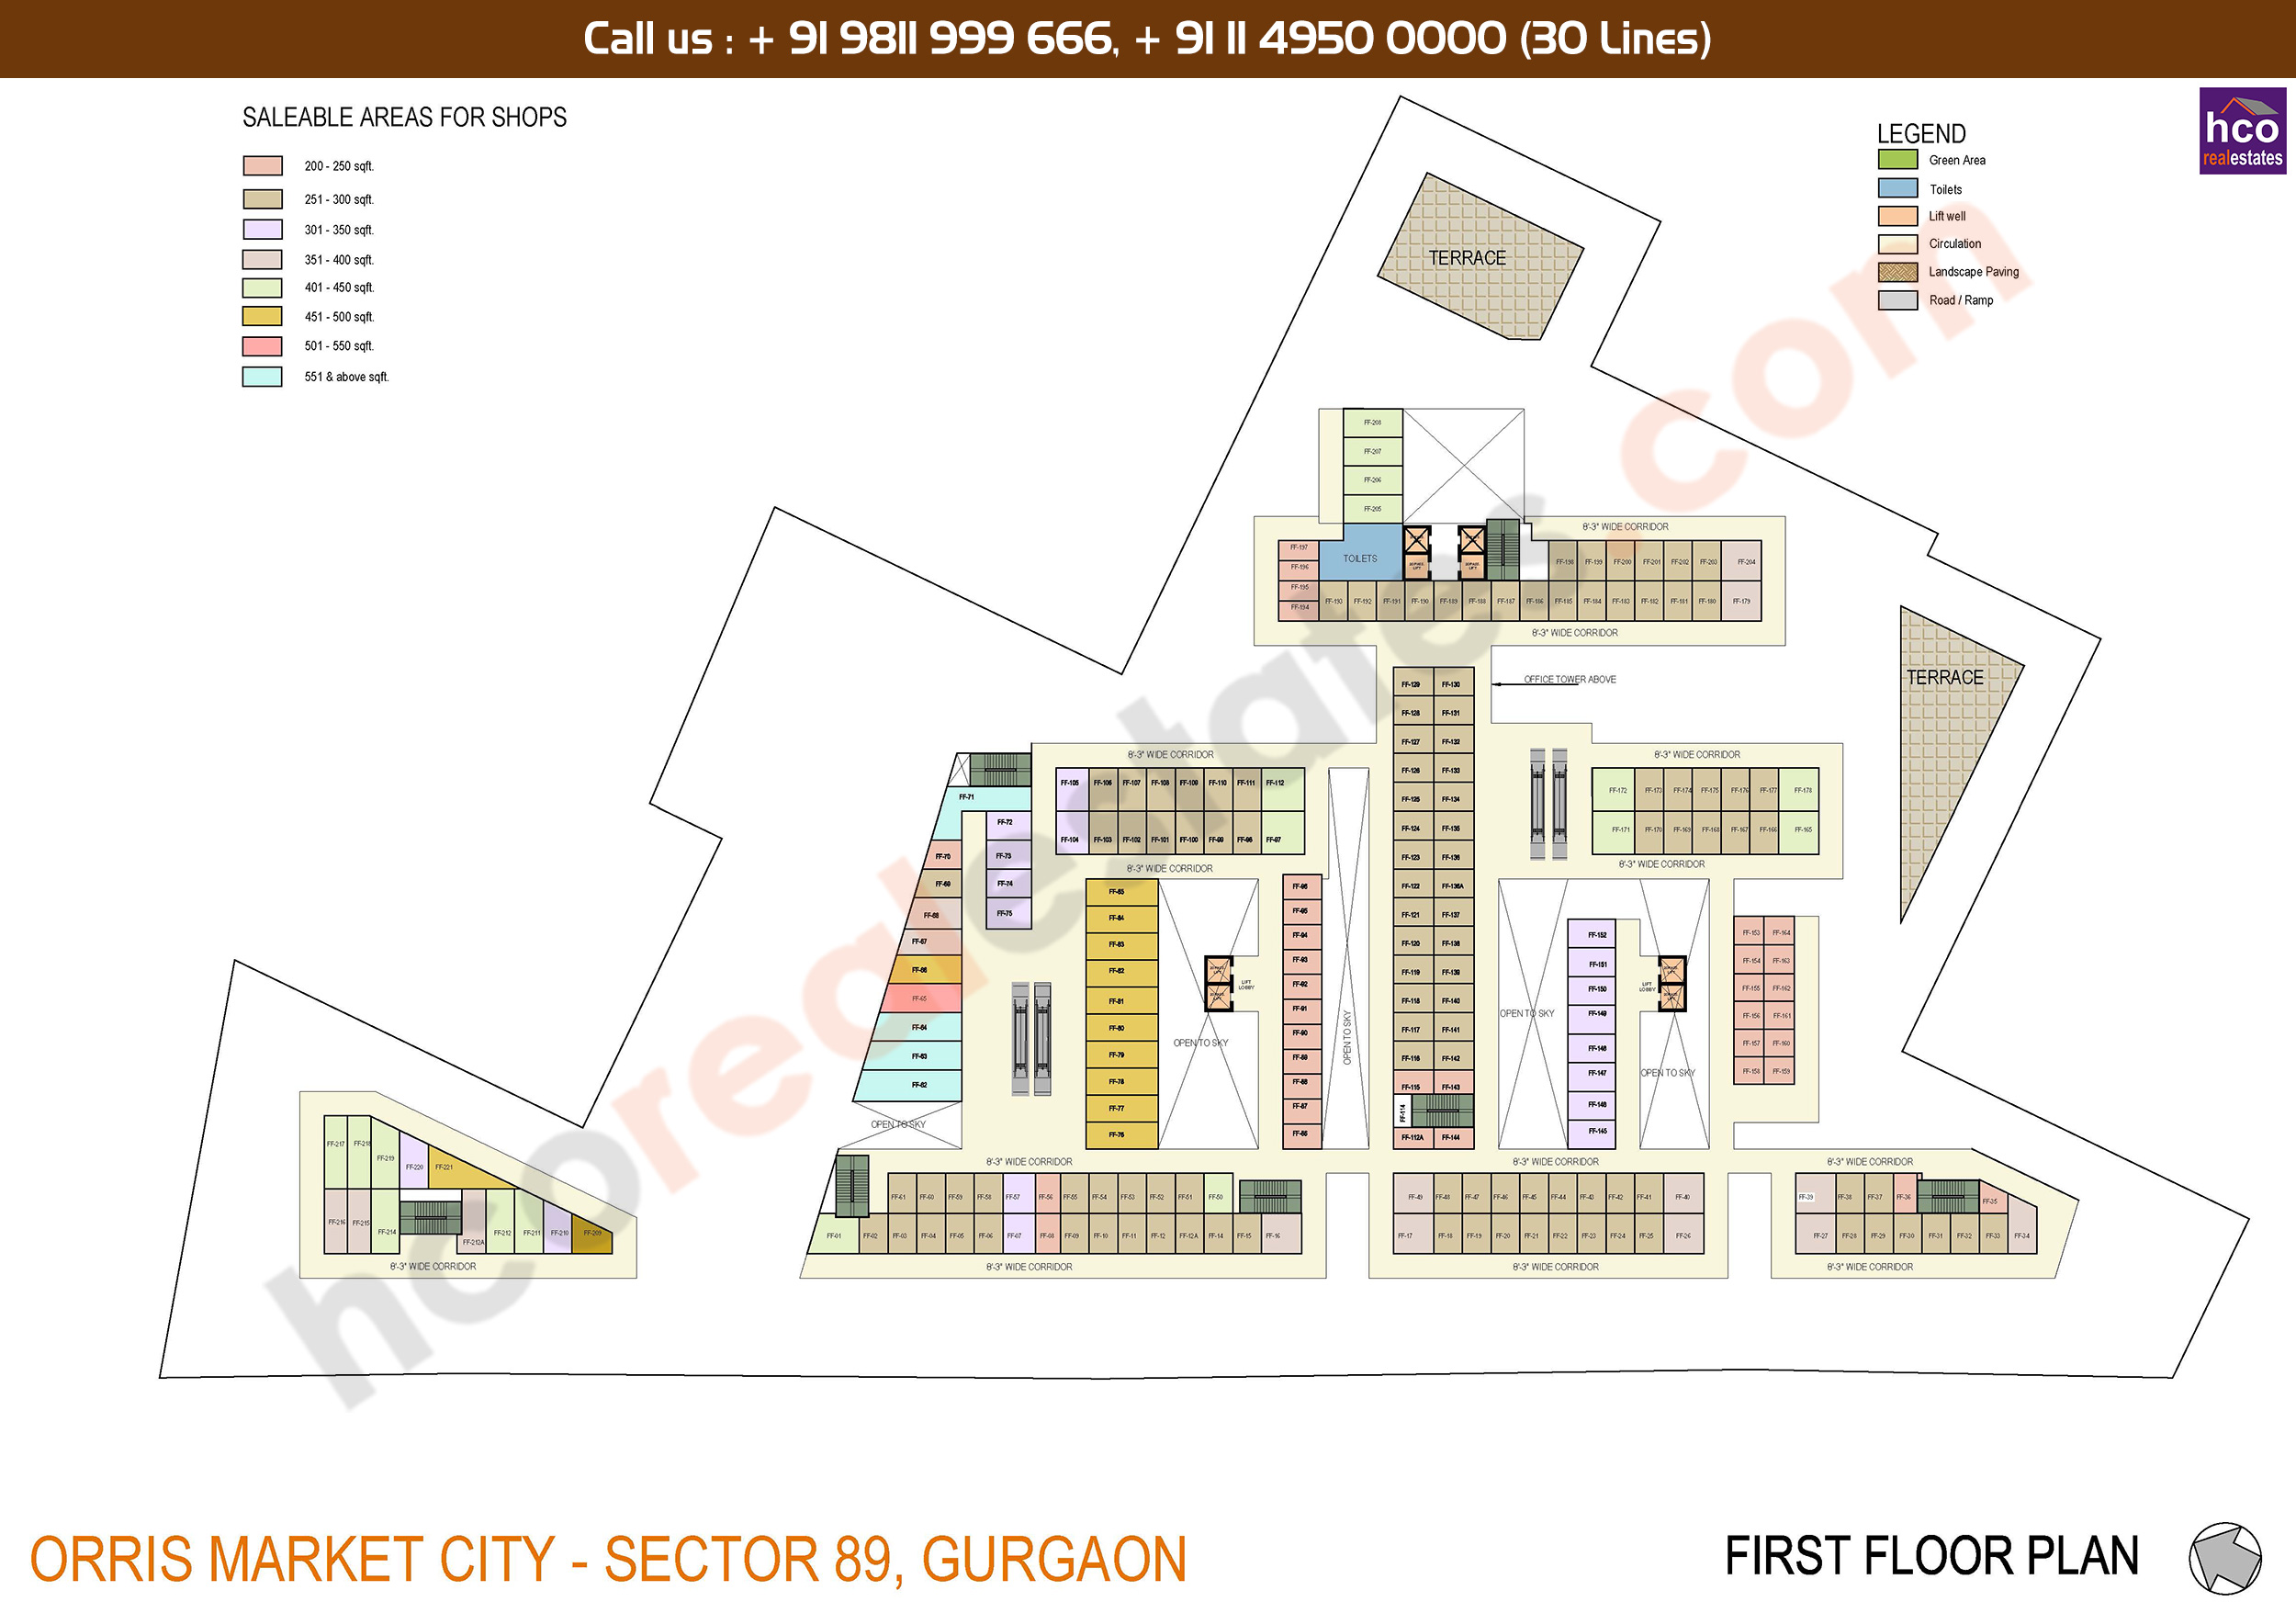 Floor Plan Orris Market City Gurgaon Sector 89.